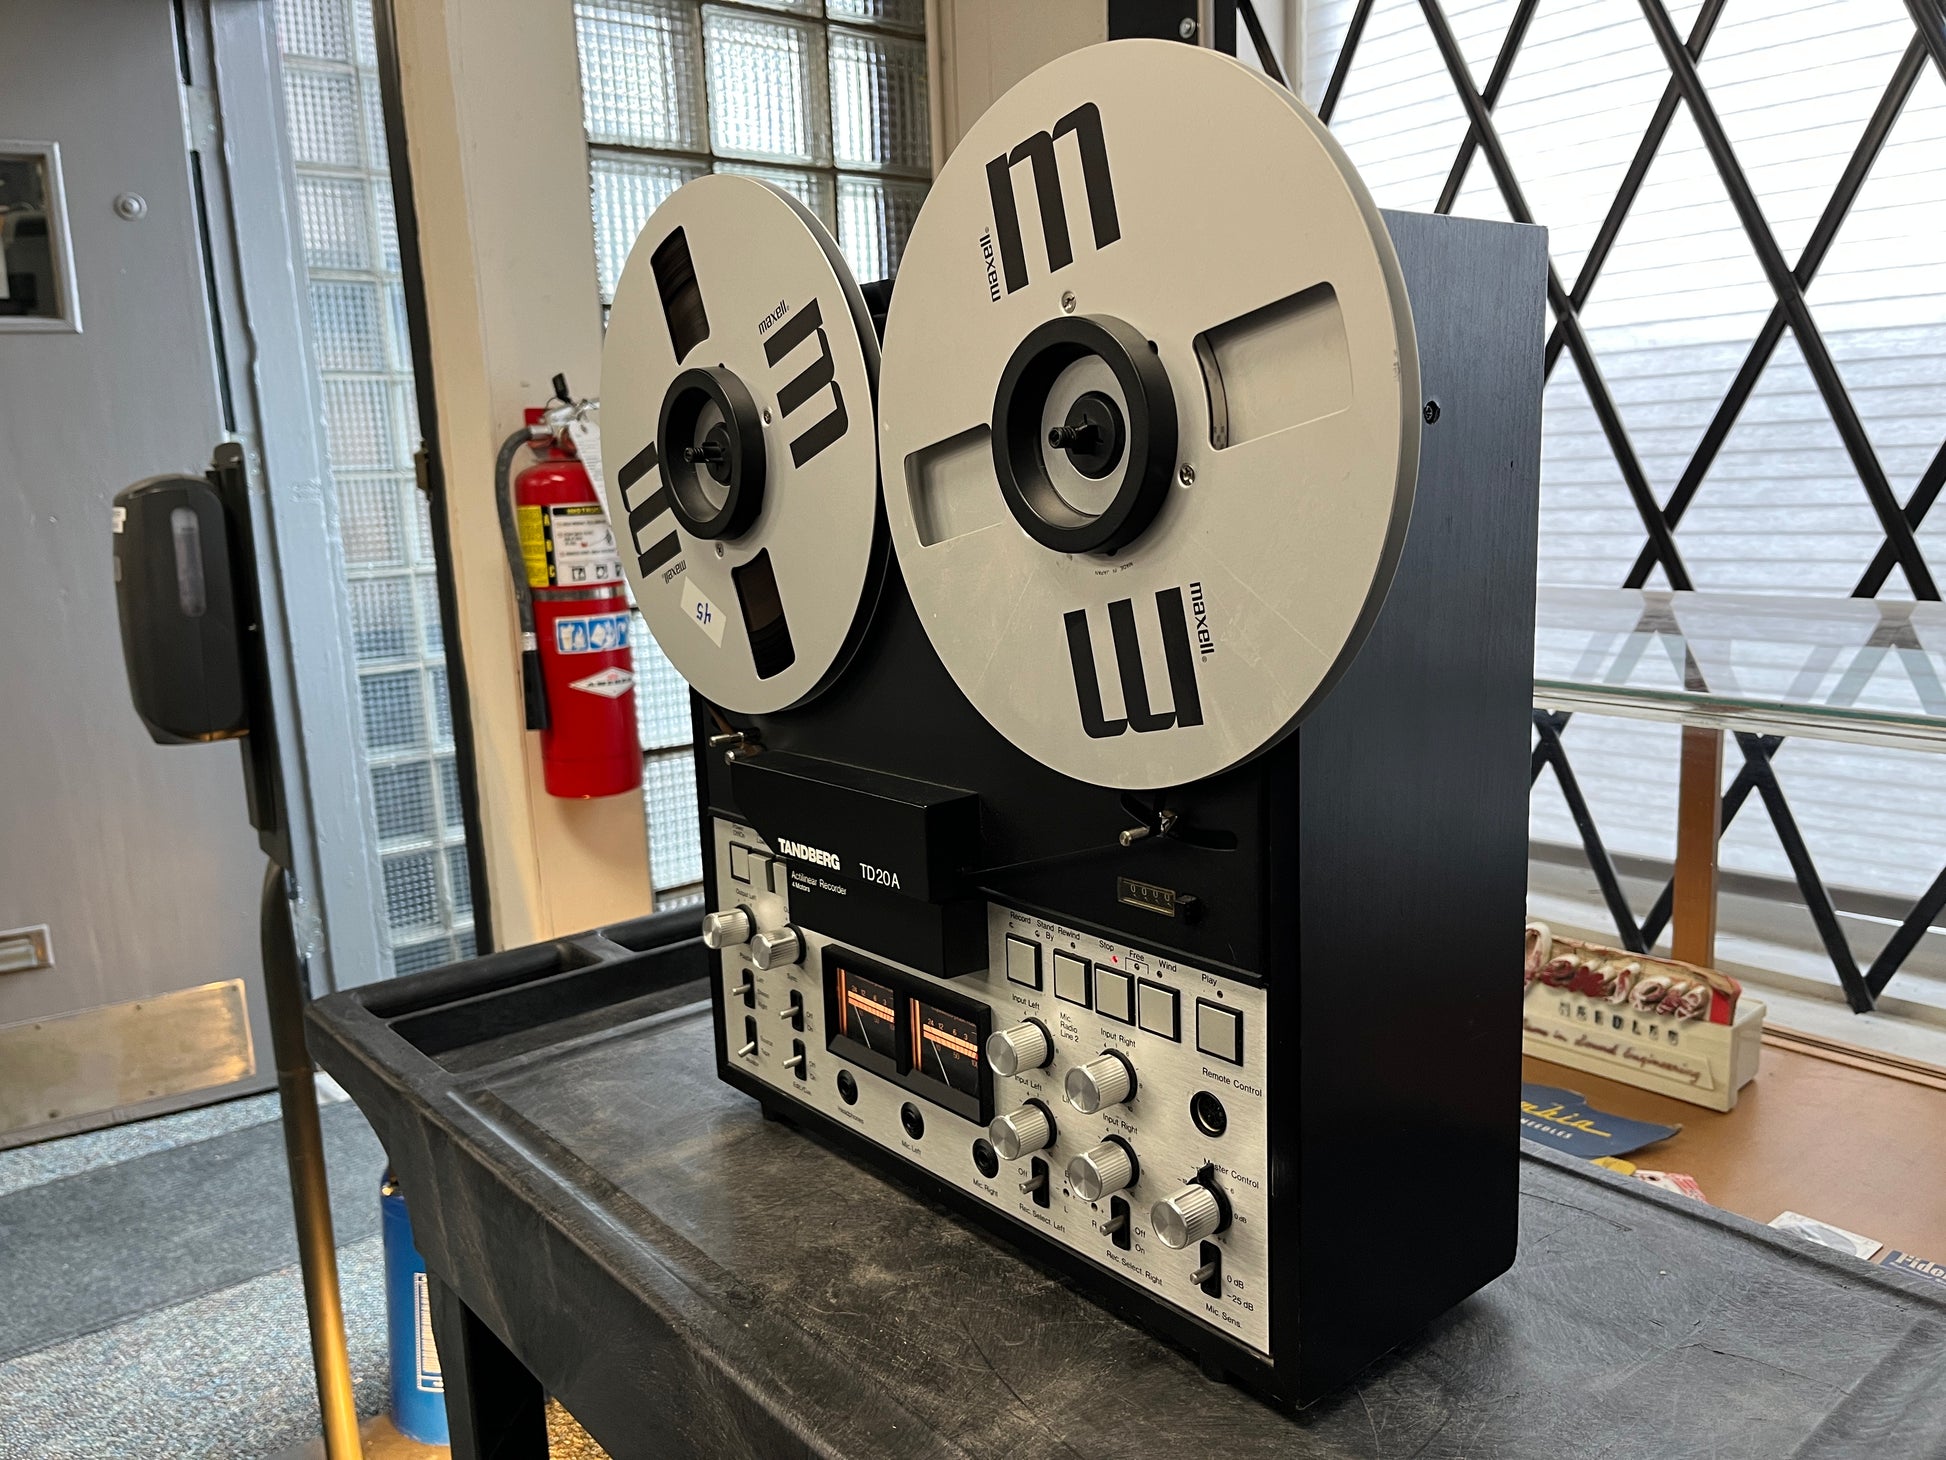 Tandberg TD 20A – Magnetic Tape Recorder